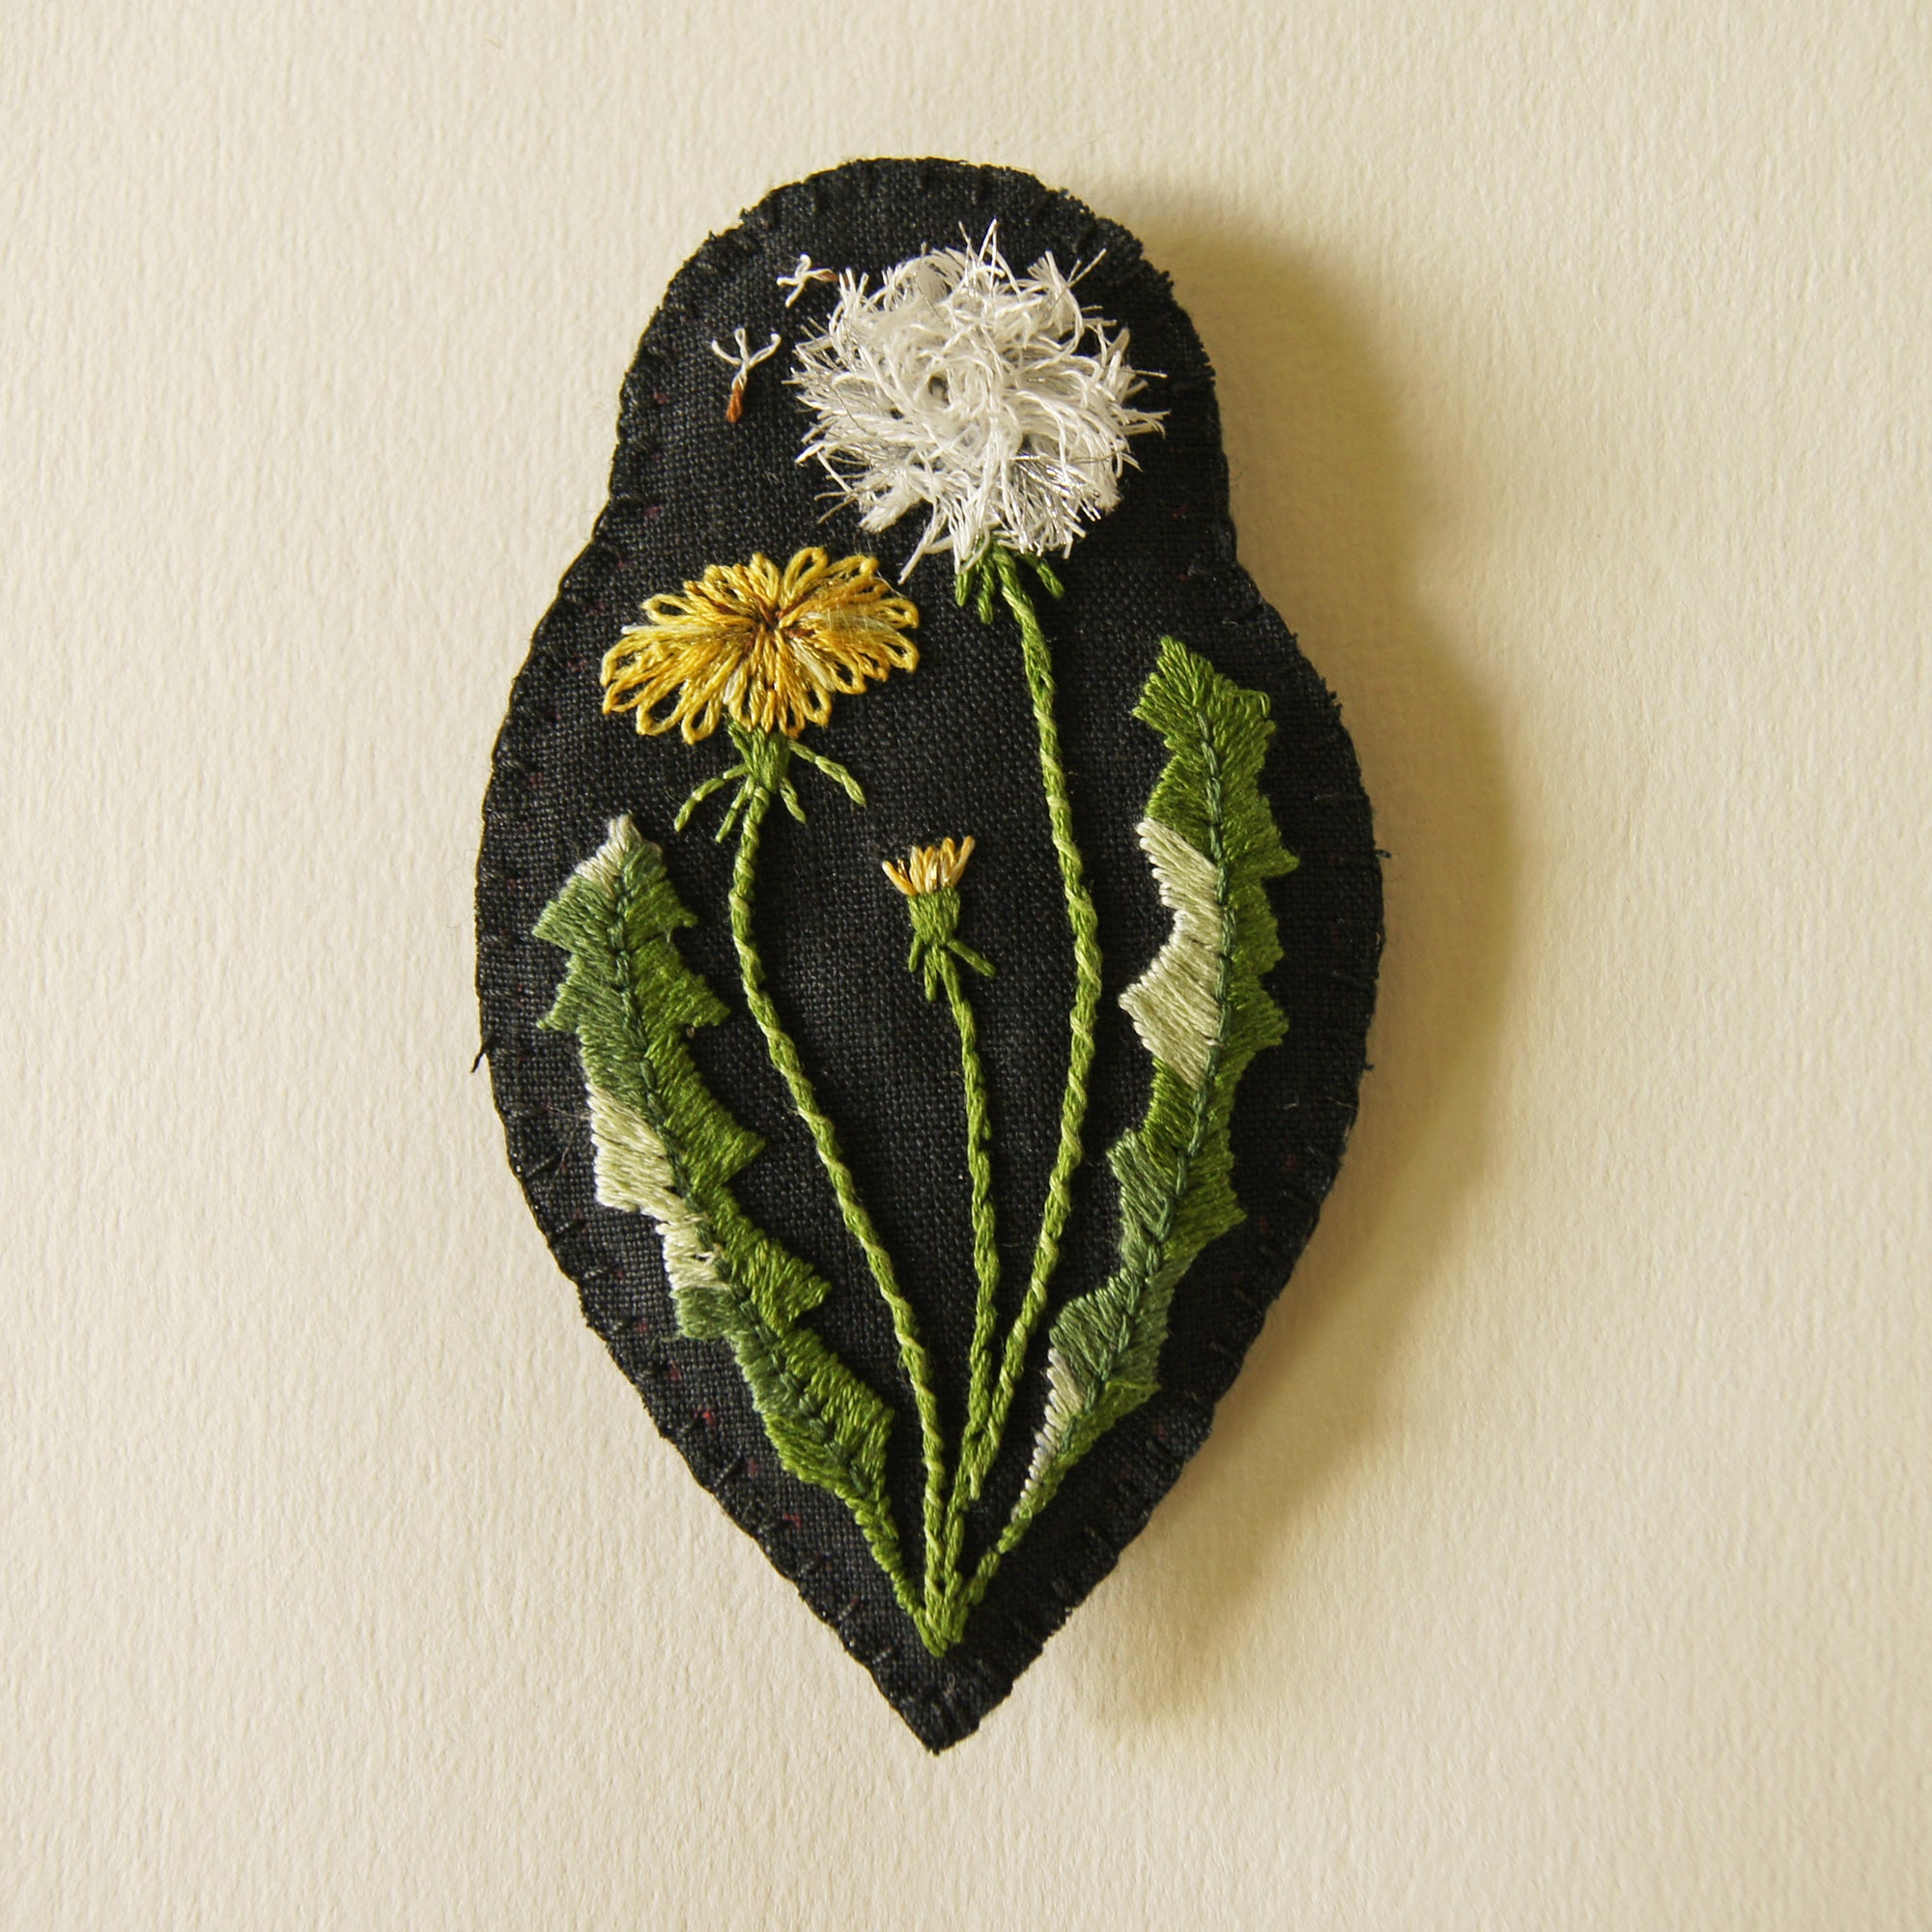 Embroidered dandelion brooch